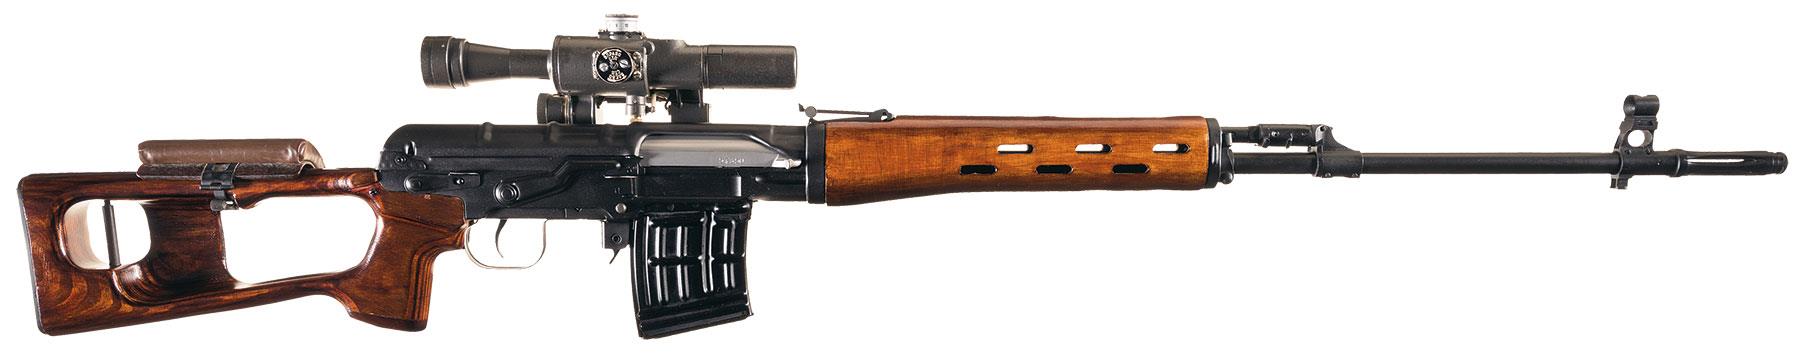 Dragunov SVD-63 Sniper Rifle | BratislavaShootingClub